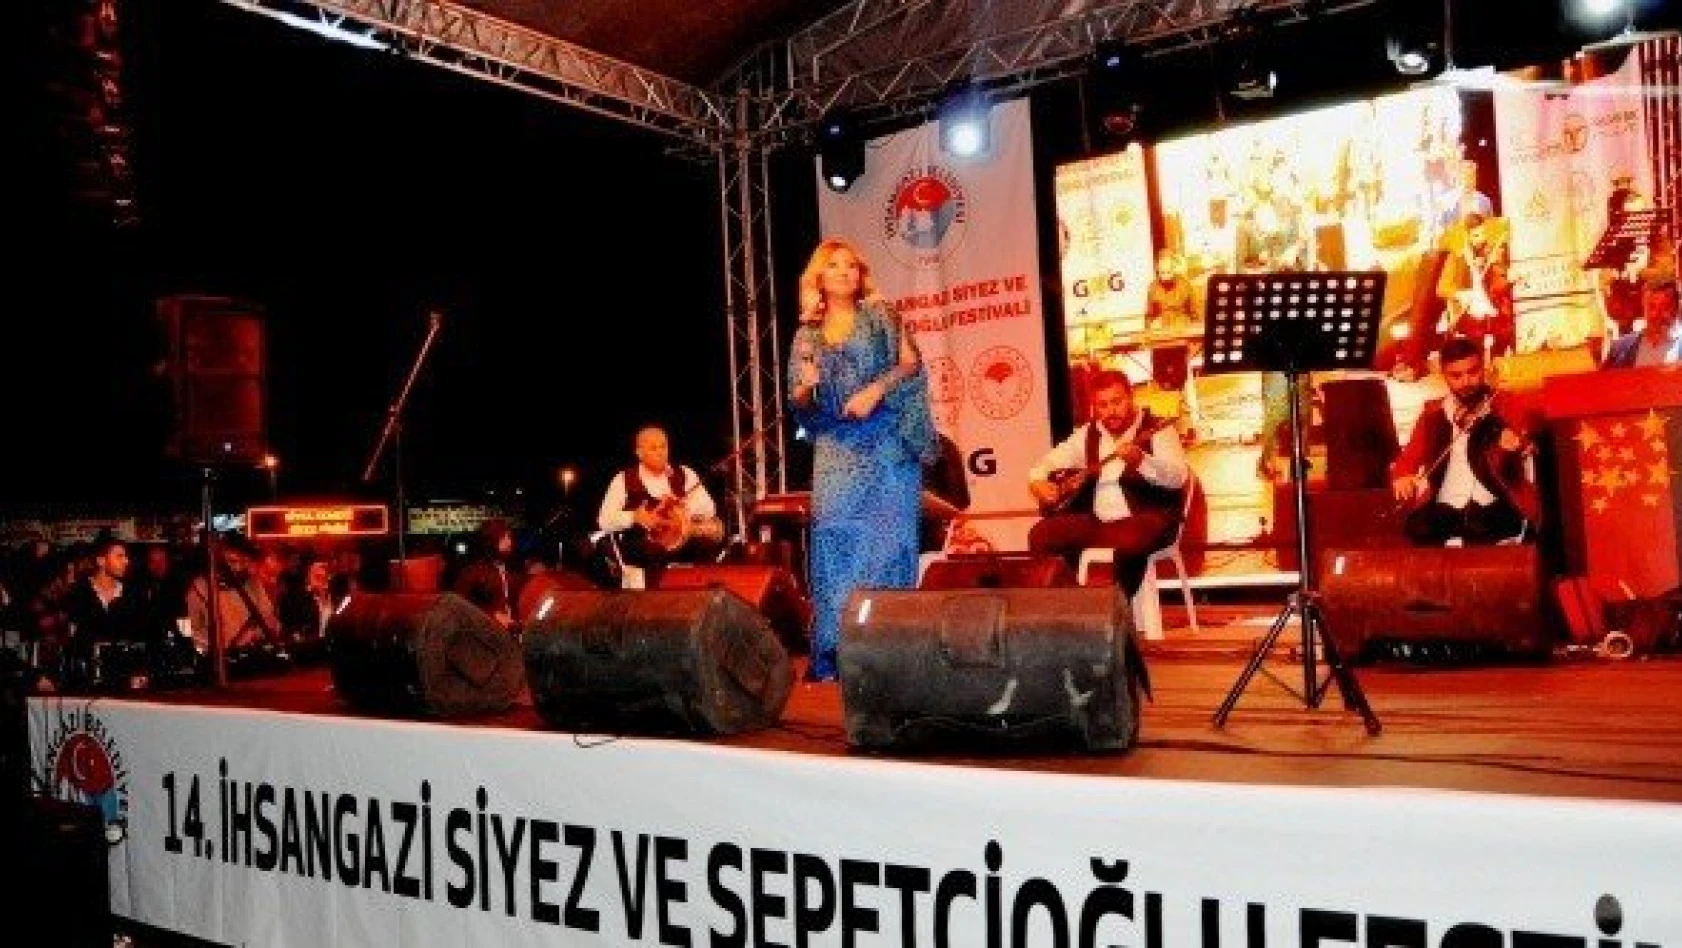 &quotİhsangazi Siyez ve Sepetçioğlu Festivali&quotnde Hamiyet konseri